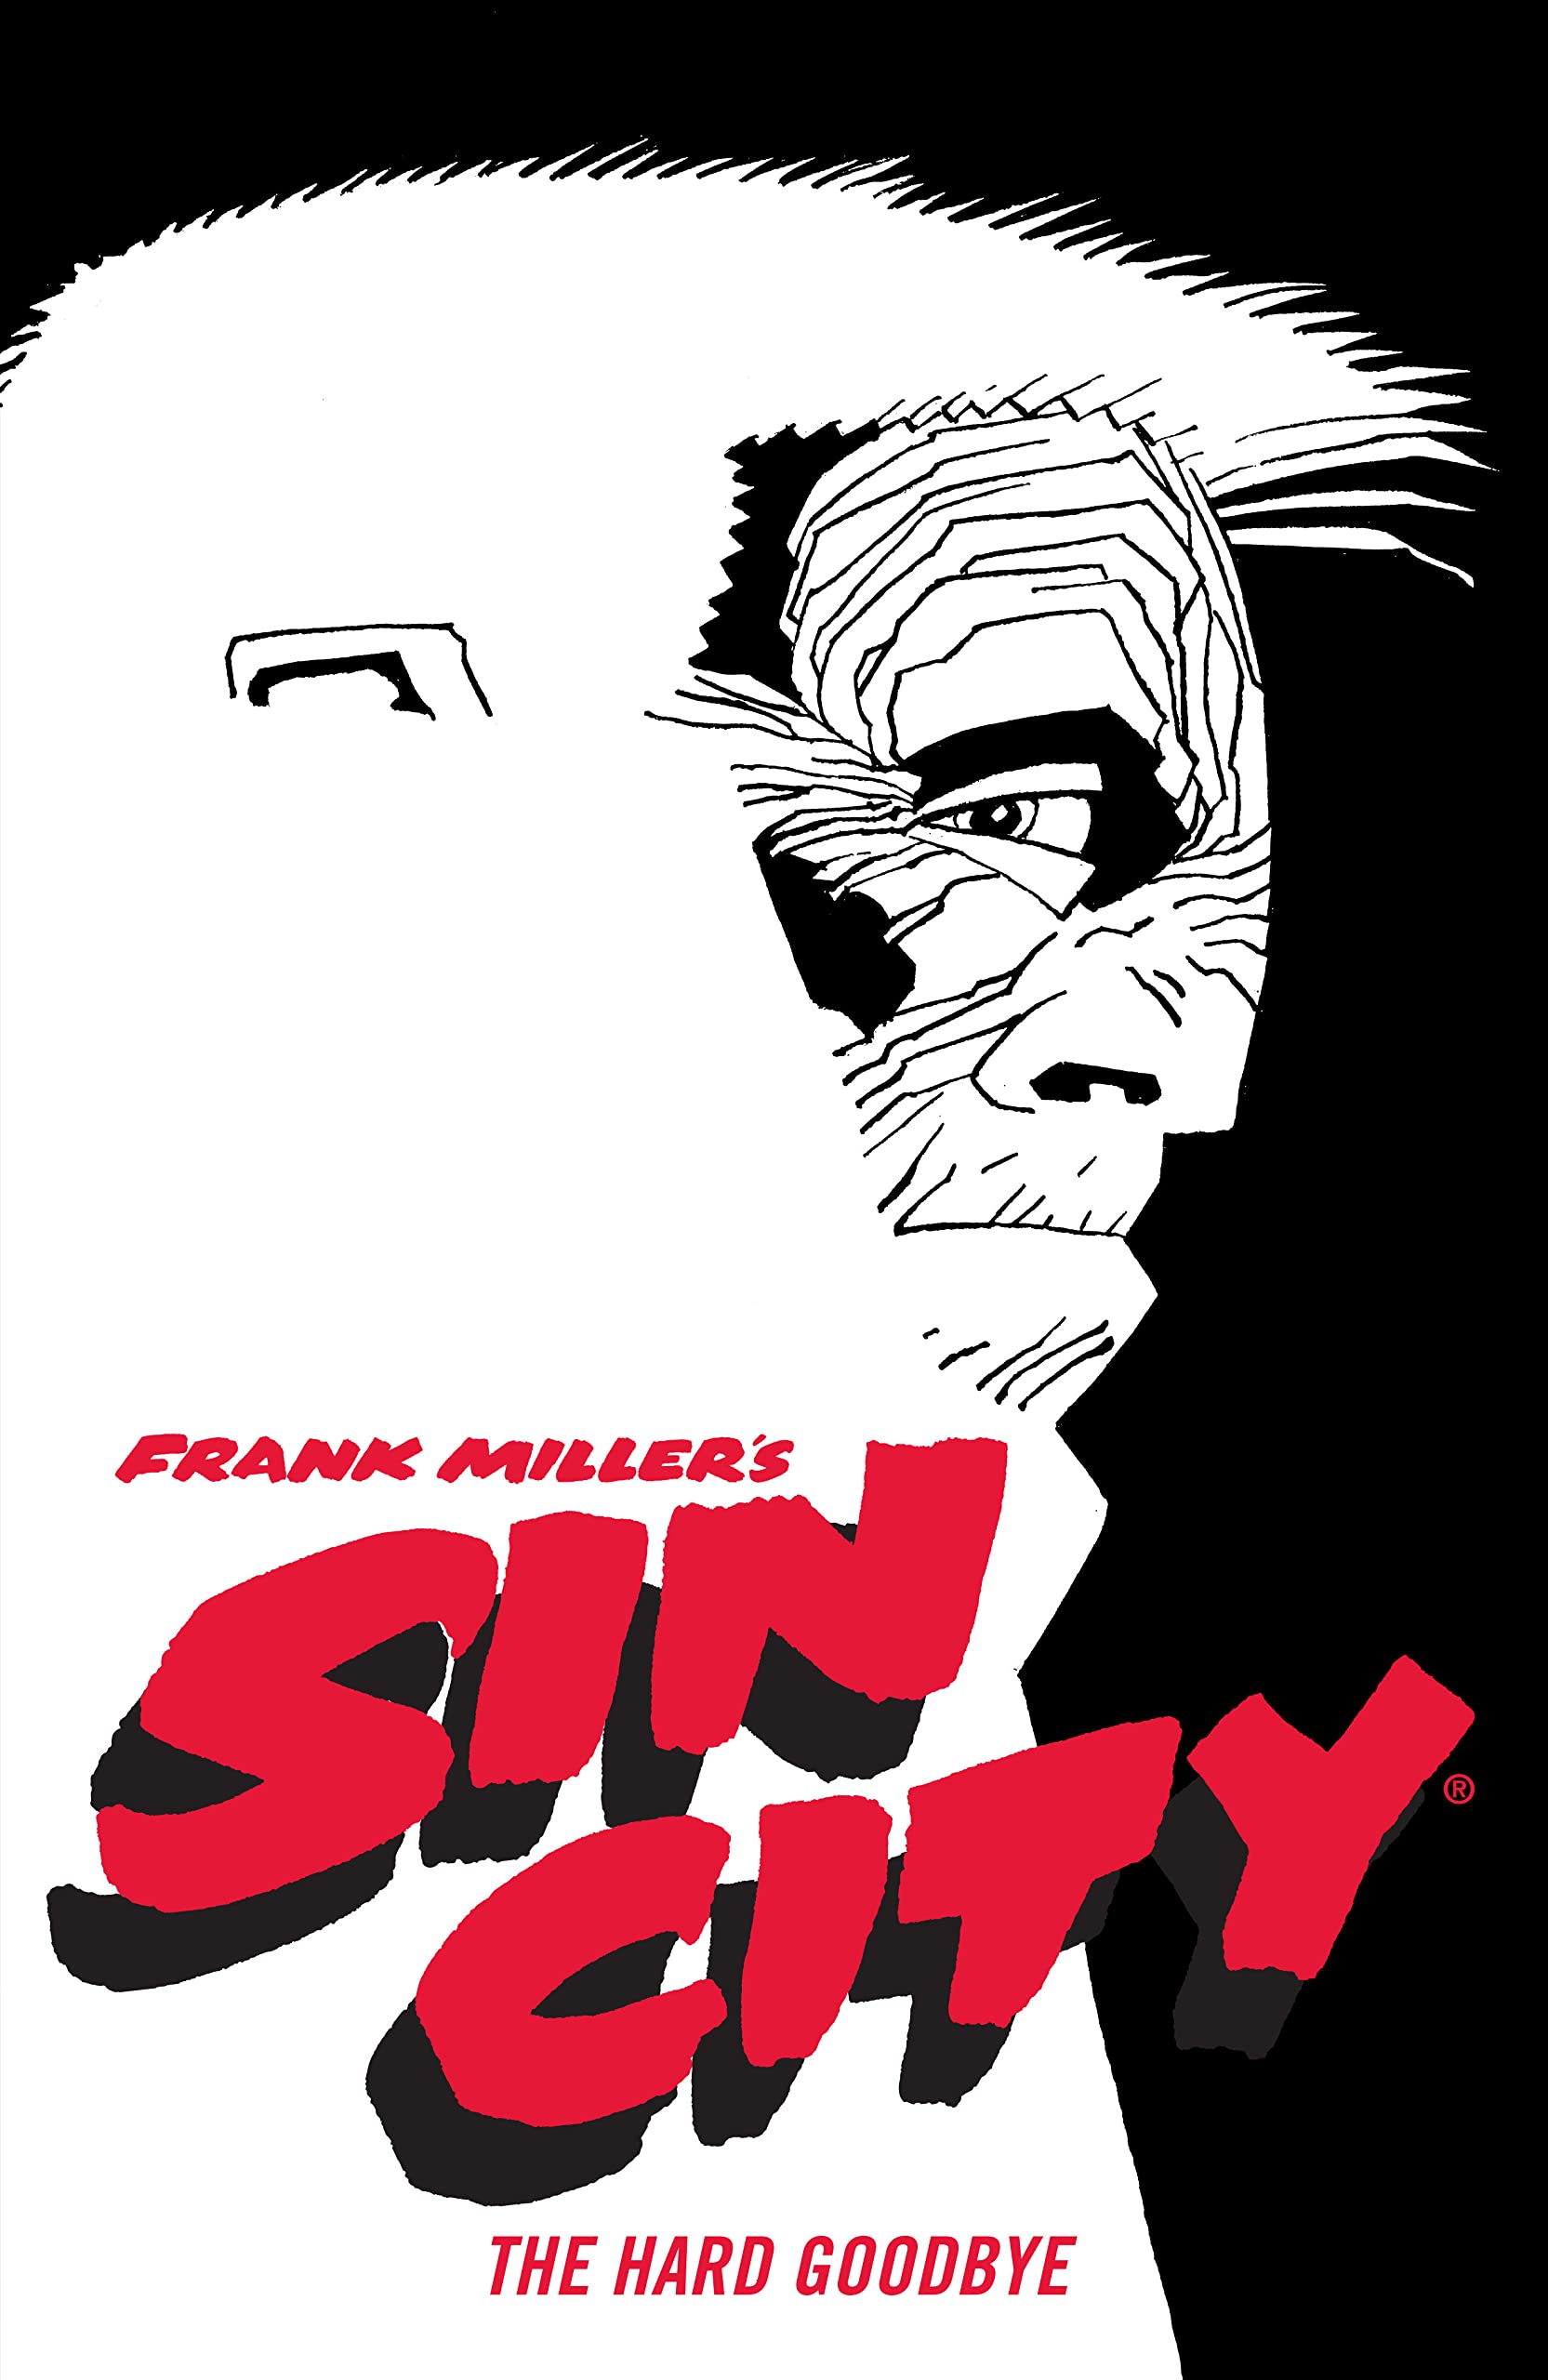 Frank Miller's Sin City Volume 1: The Hard Goodbye